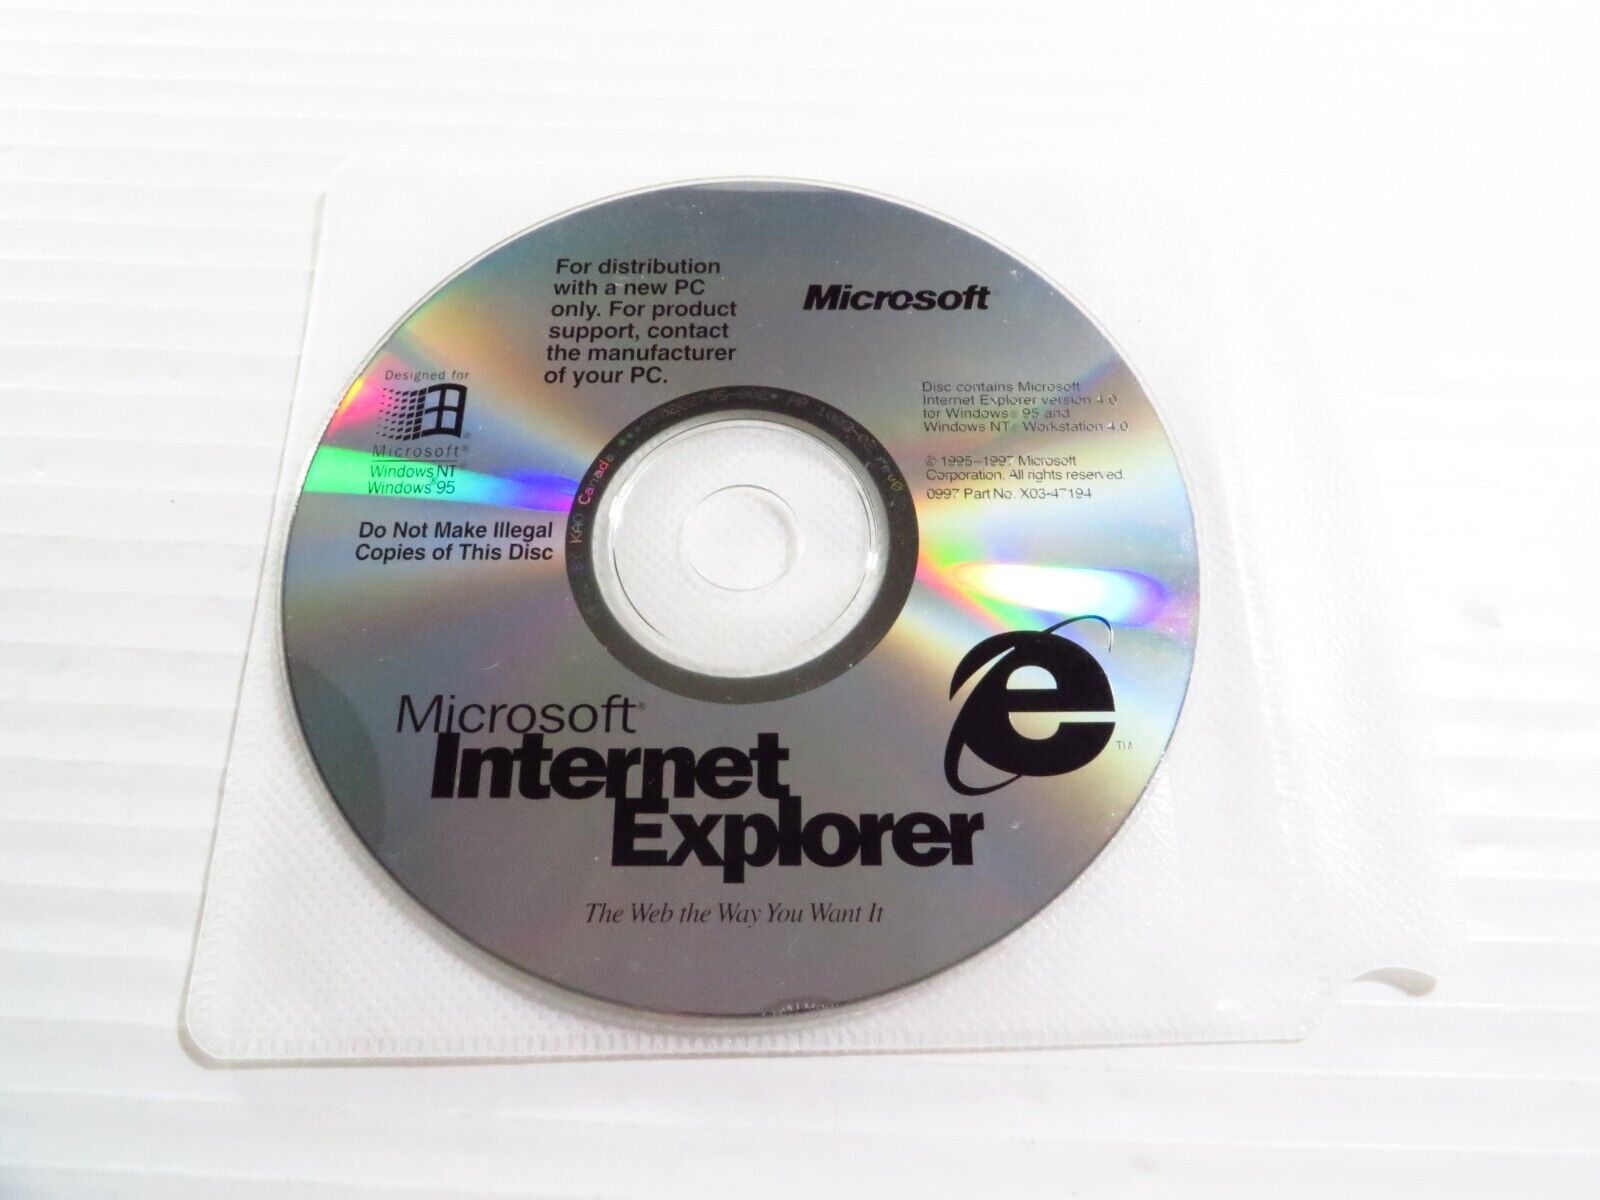 Microsoft Internet Explorer 4.0 Software CD for Windows 95/Windows NT